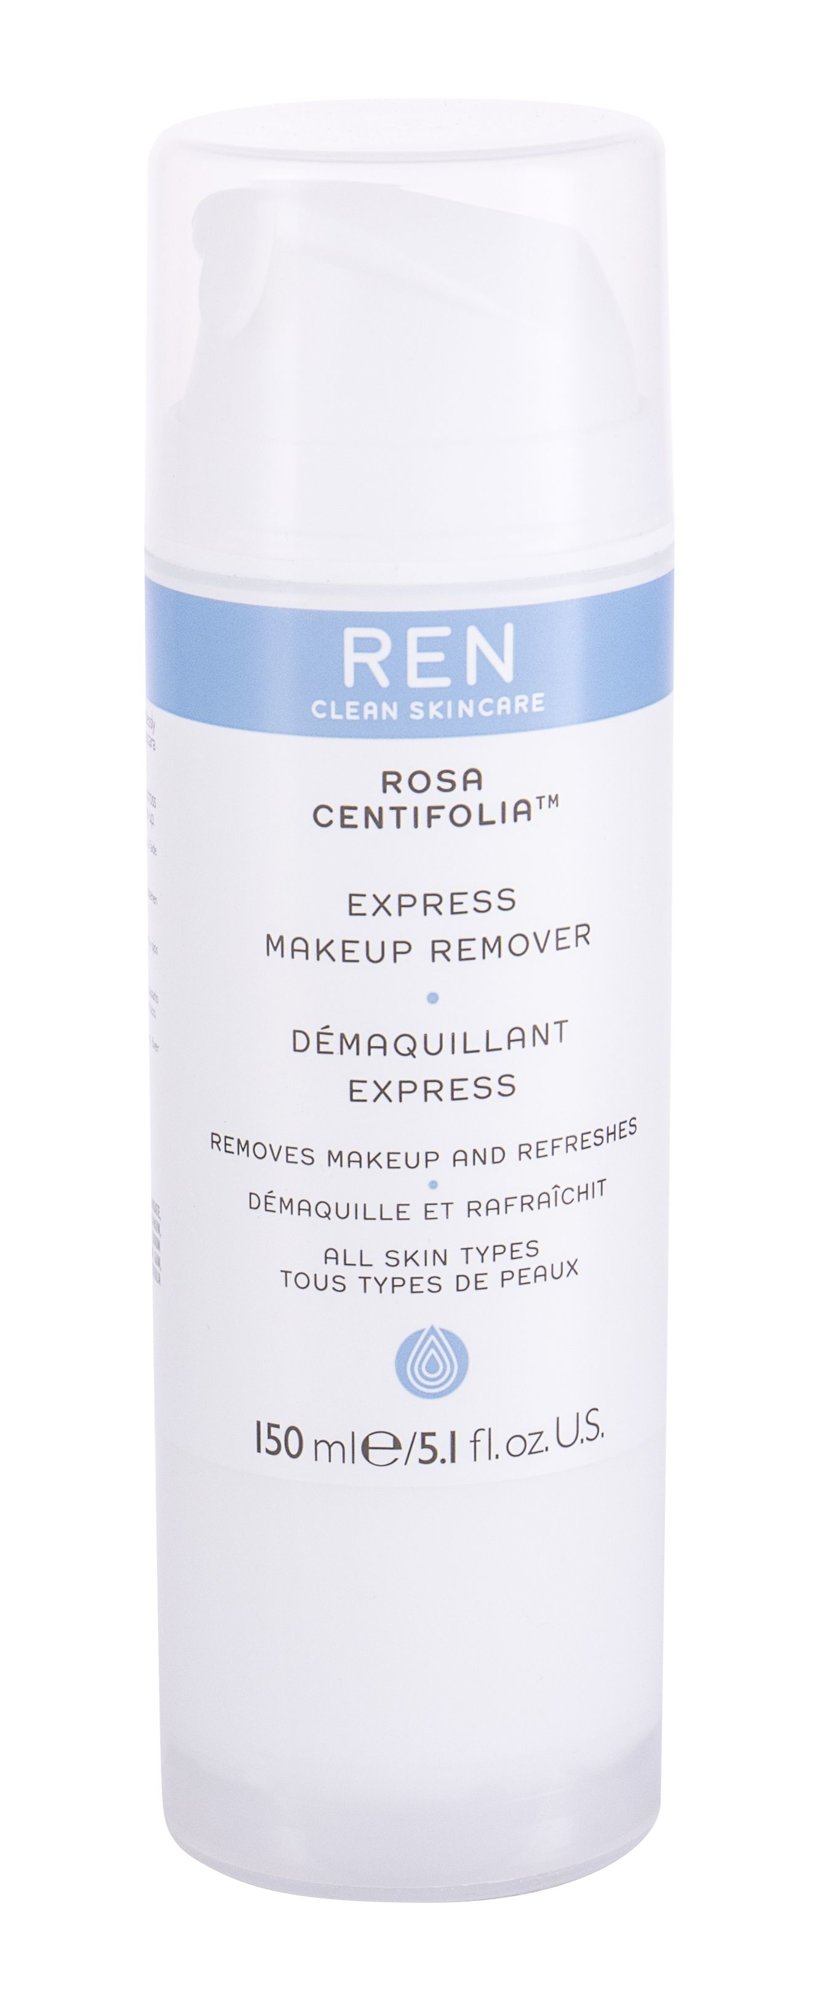 Ren Clean Skincare Rosa Centifolia Express 150ml veido valiklis